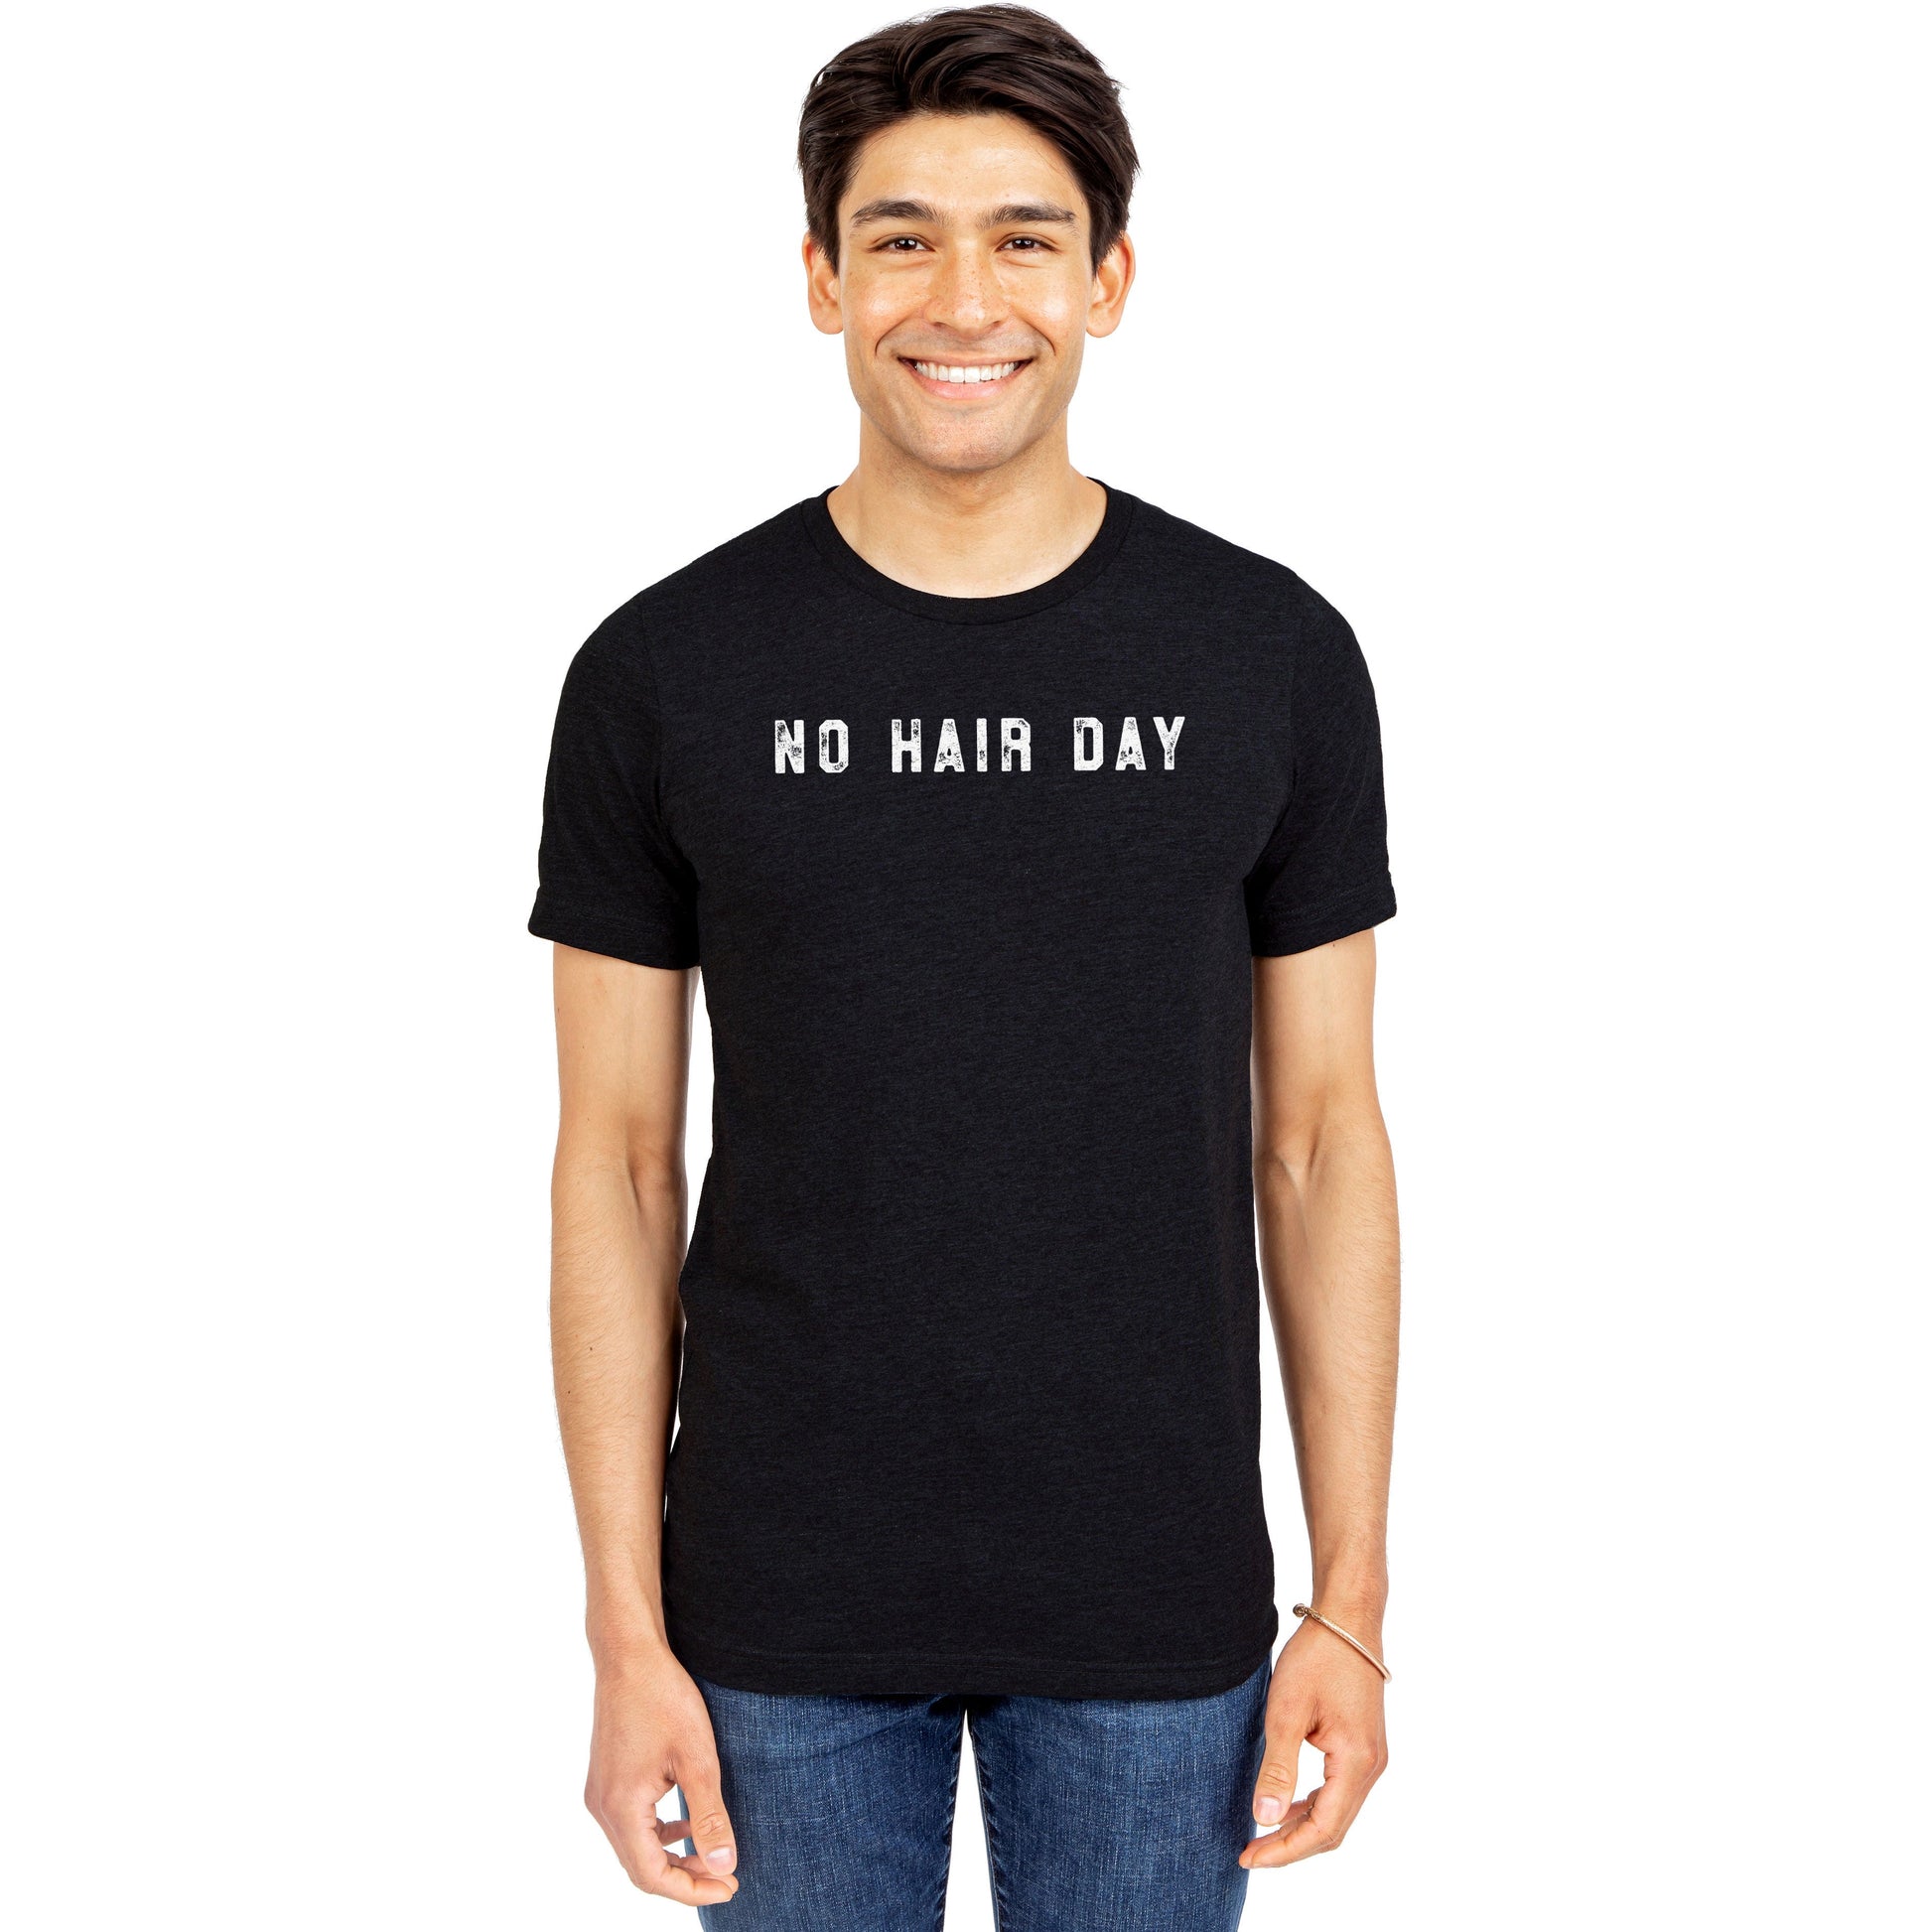 No Hair Day Black Printed Graphic Men's Crew T-Shirt Tee Model